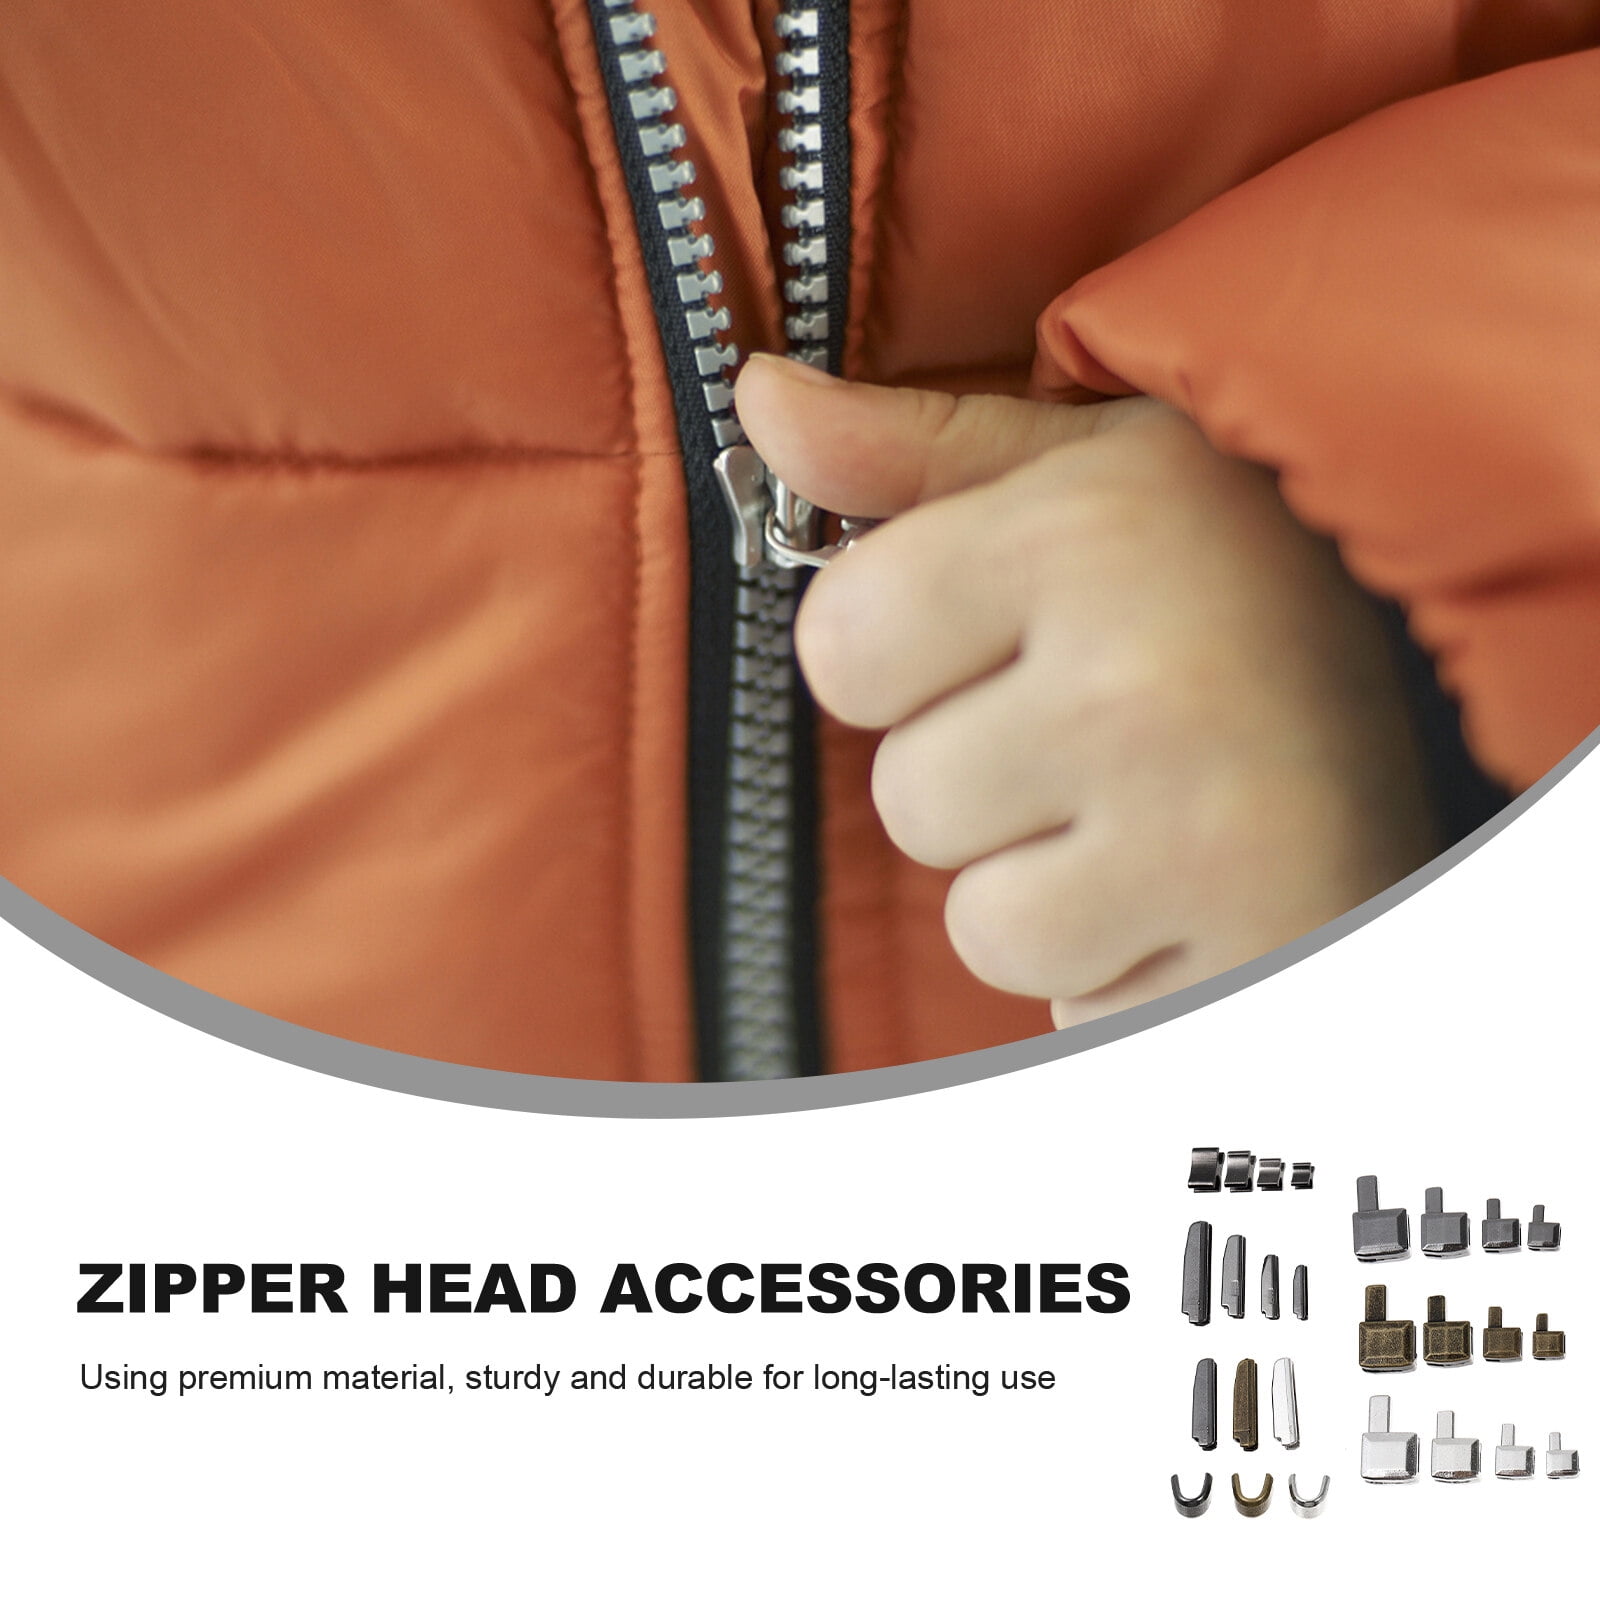 24zipper bottom stop replacement Sets zipper retainer Size 3/5/8/10 Metal